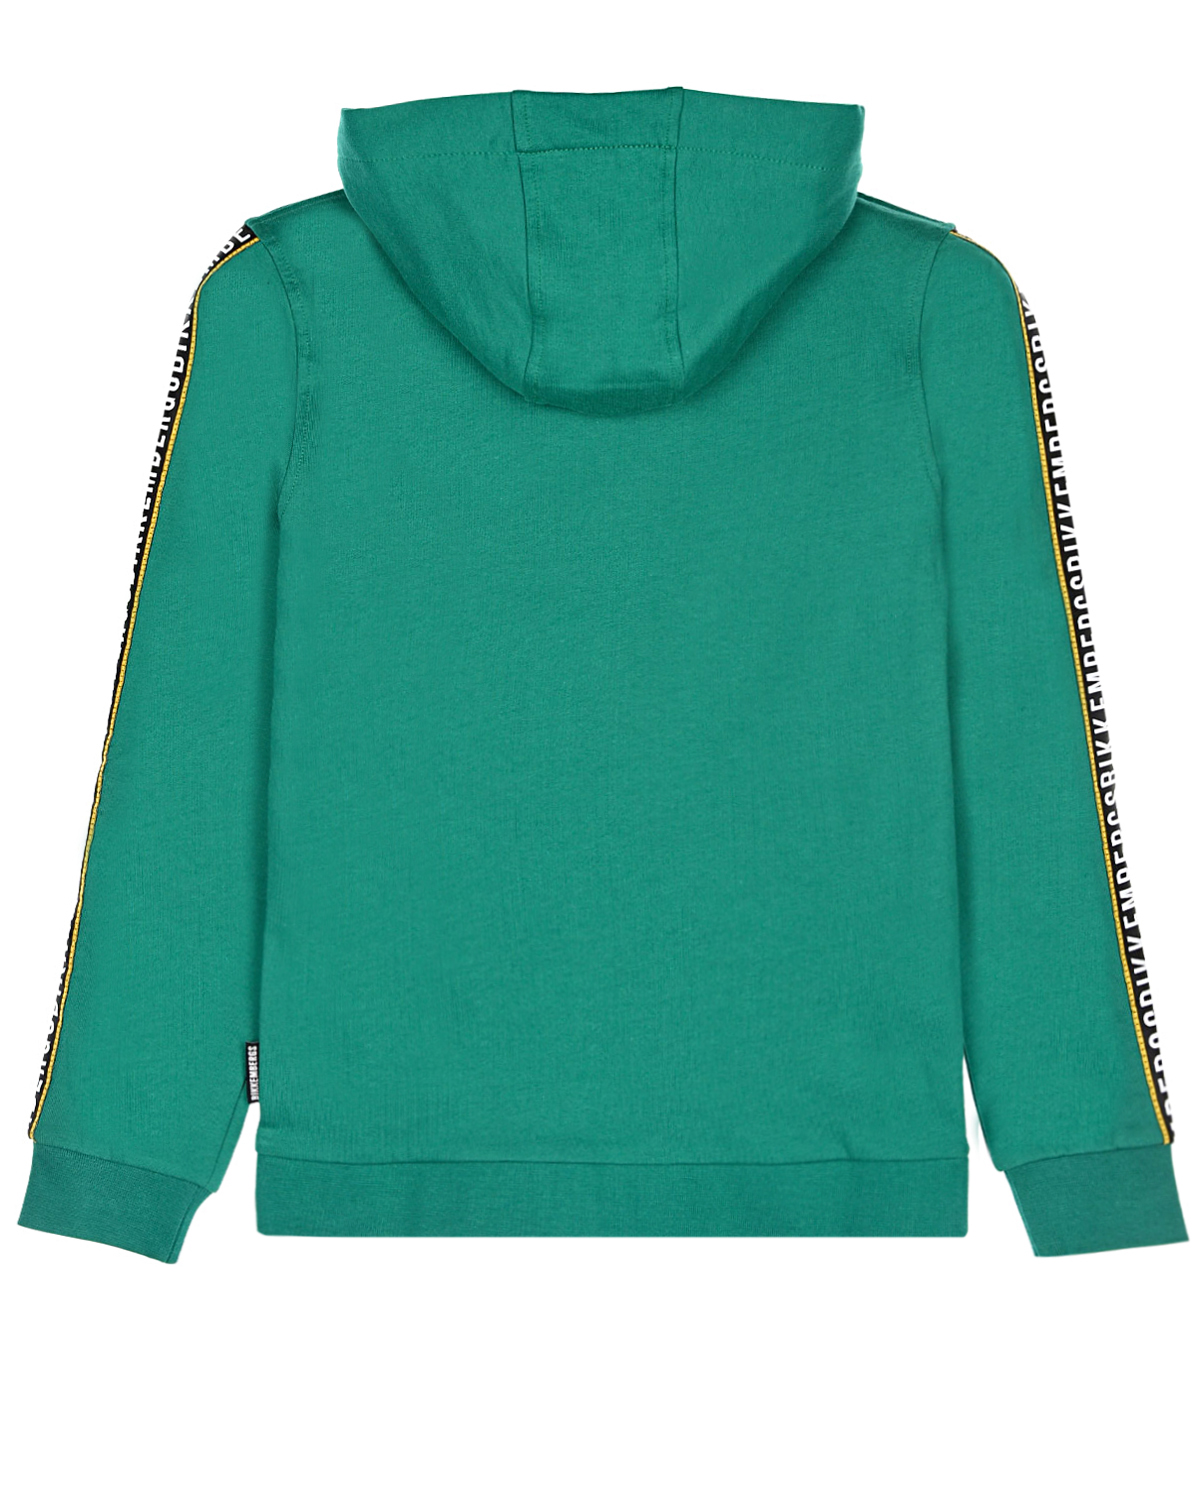 Зеленая спортивная куртка с лампасами Bikkembergs детская, размер 116, цвет зеленый - фото 2